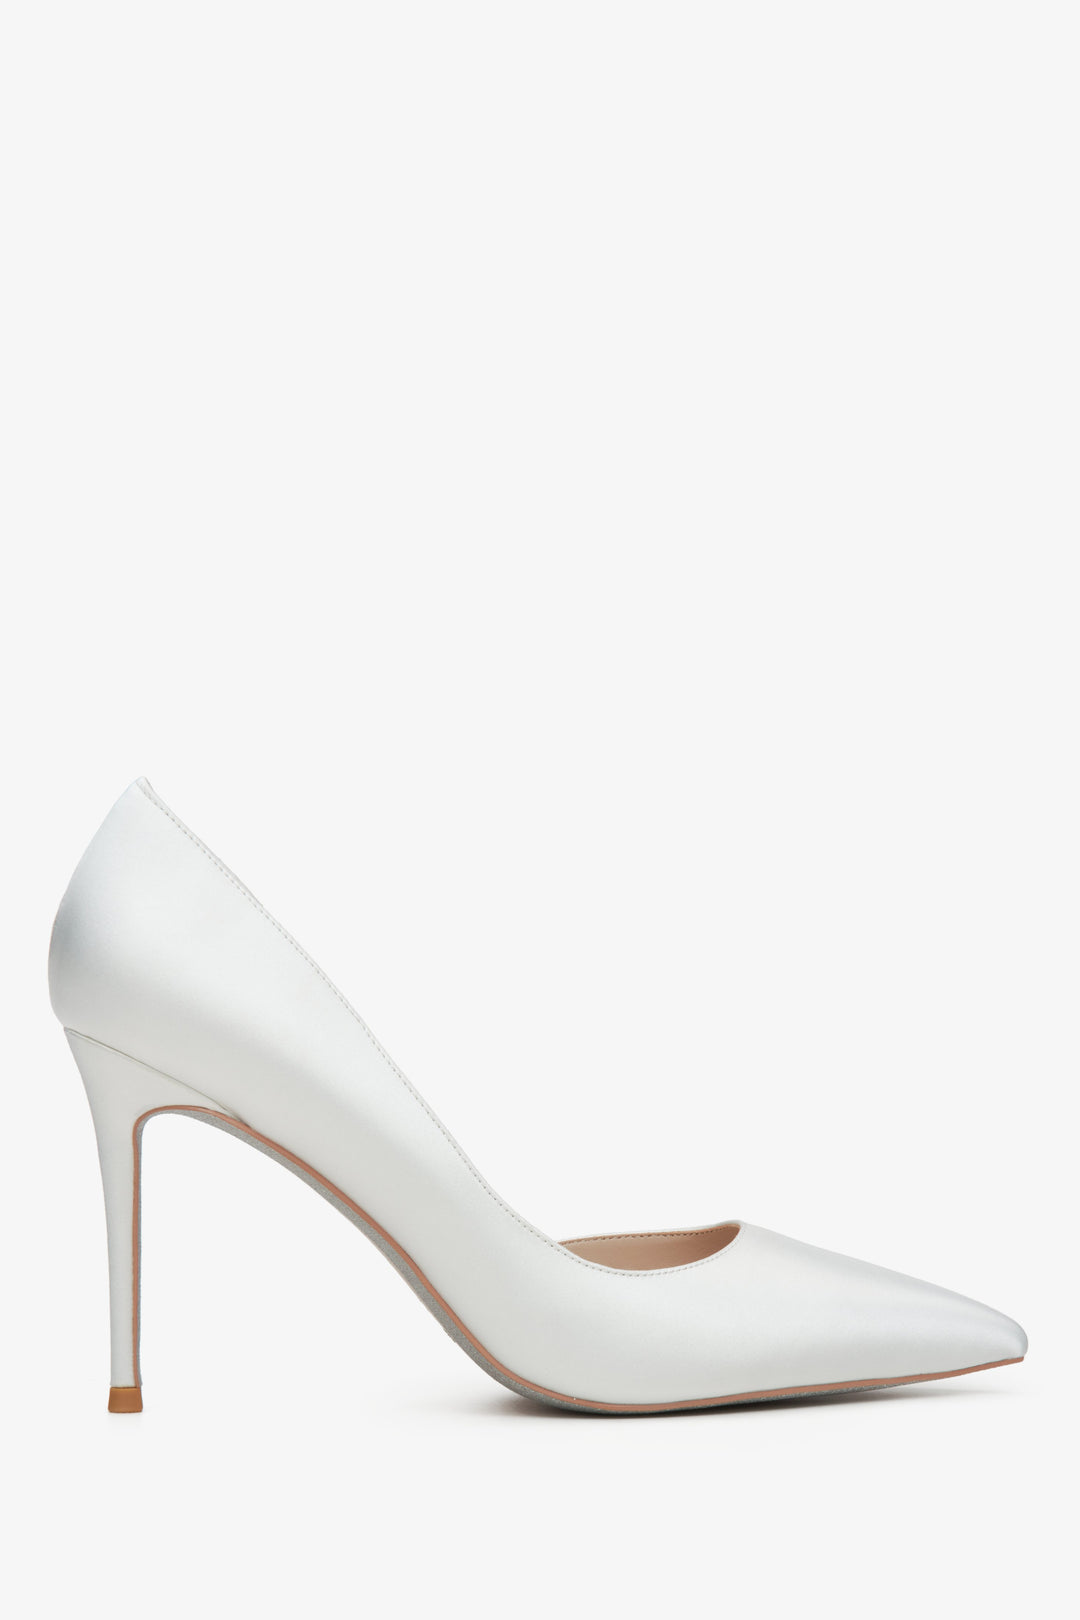 Women's Milk-White Pointed Toe High Heels with Satin Finish Estro ER00114767.